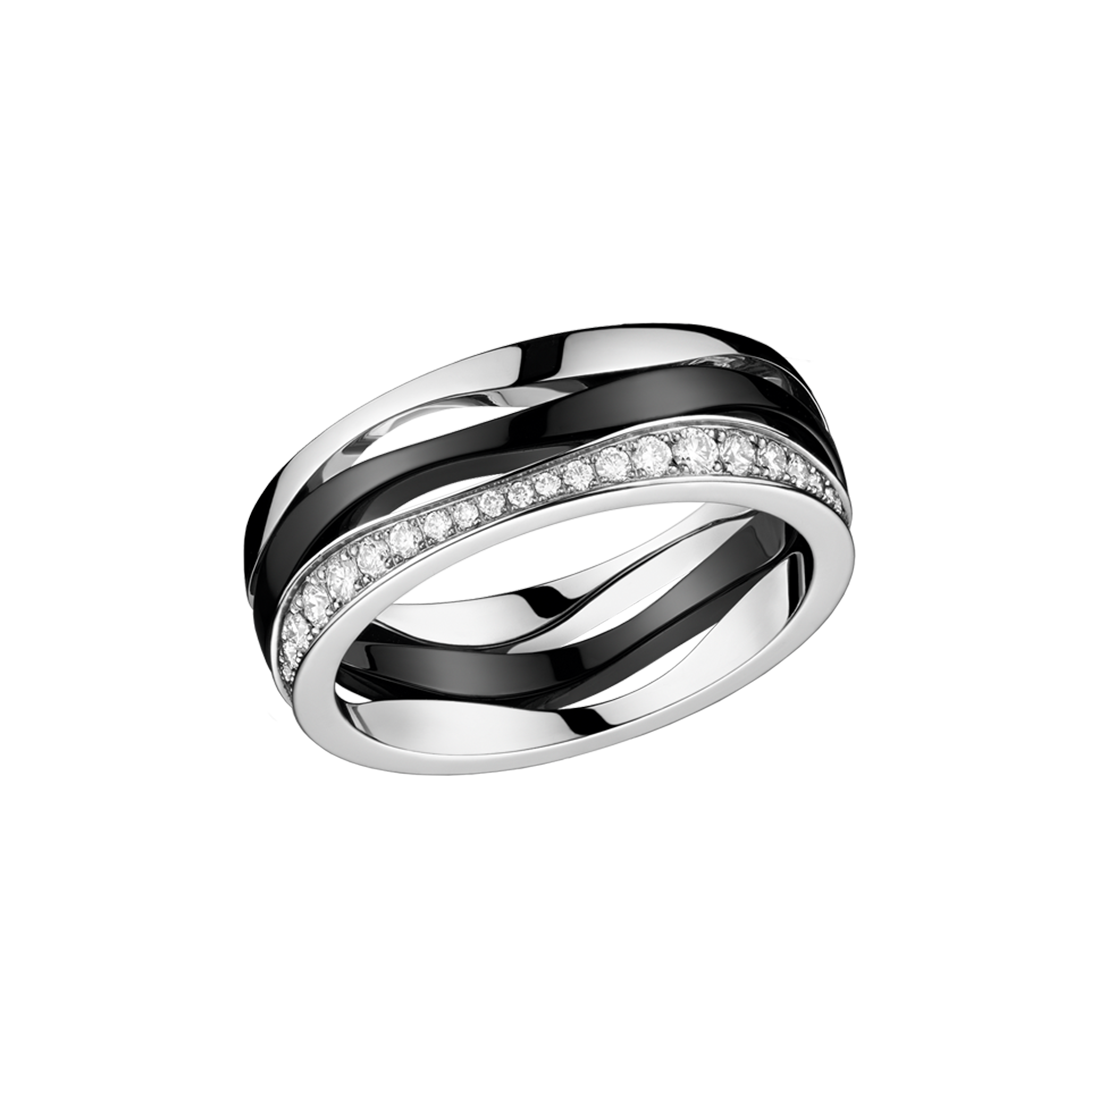 Ladymatic Ring, 18K white gold, Ceramic, Diamonds - R604CL01001XX